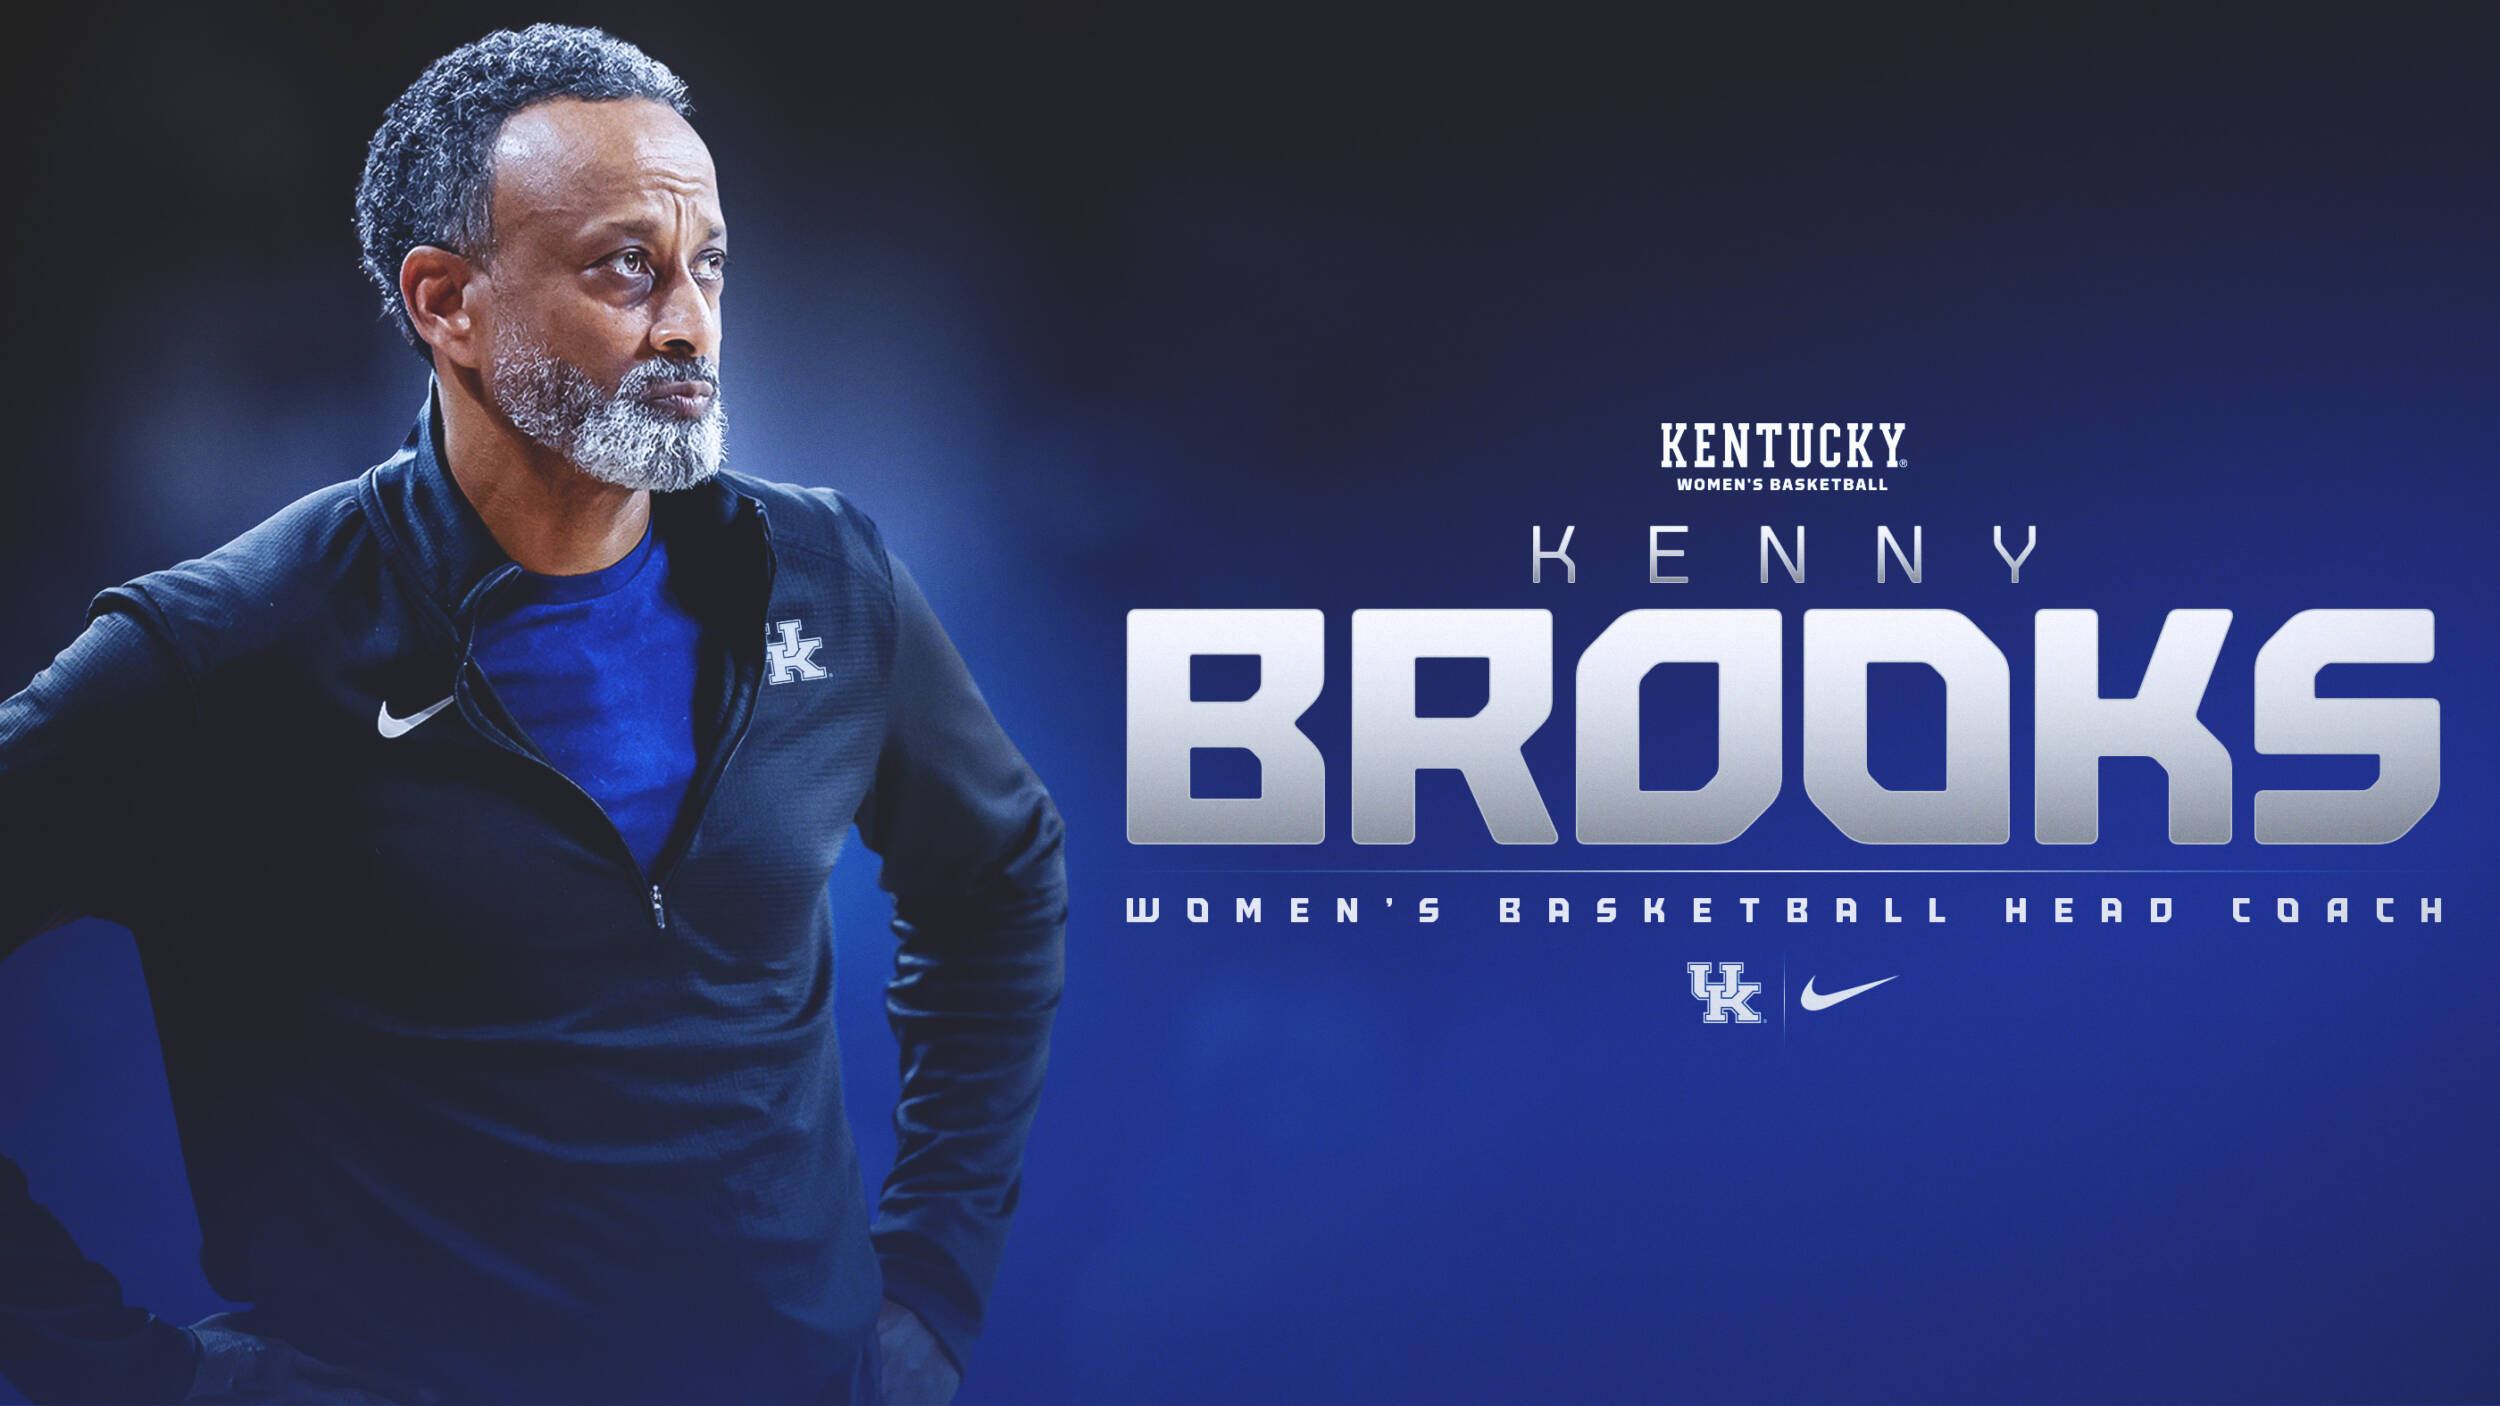 Kenny Brooks Named Kentucky Women’s Basketball Head Coach